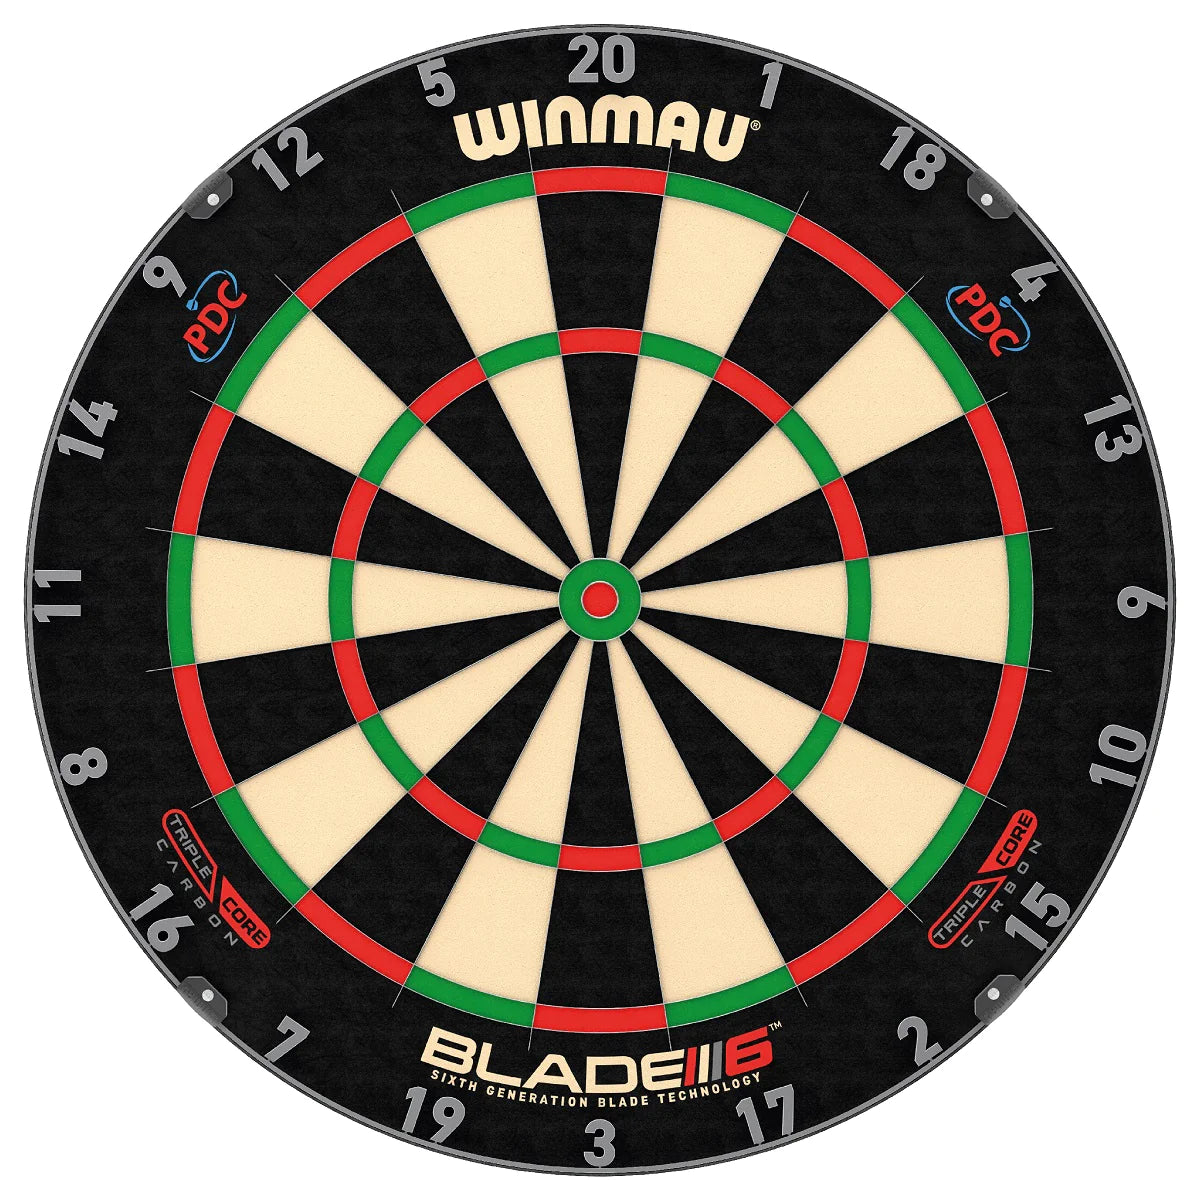 WINMAU - BLADE 6 - TRIPLE CORE - Professional Dartboard